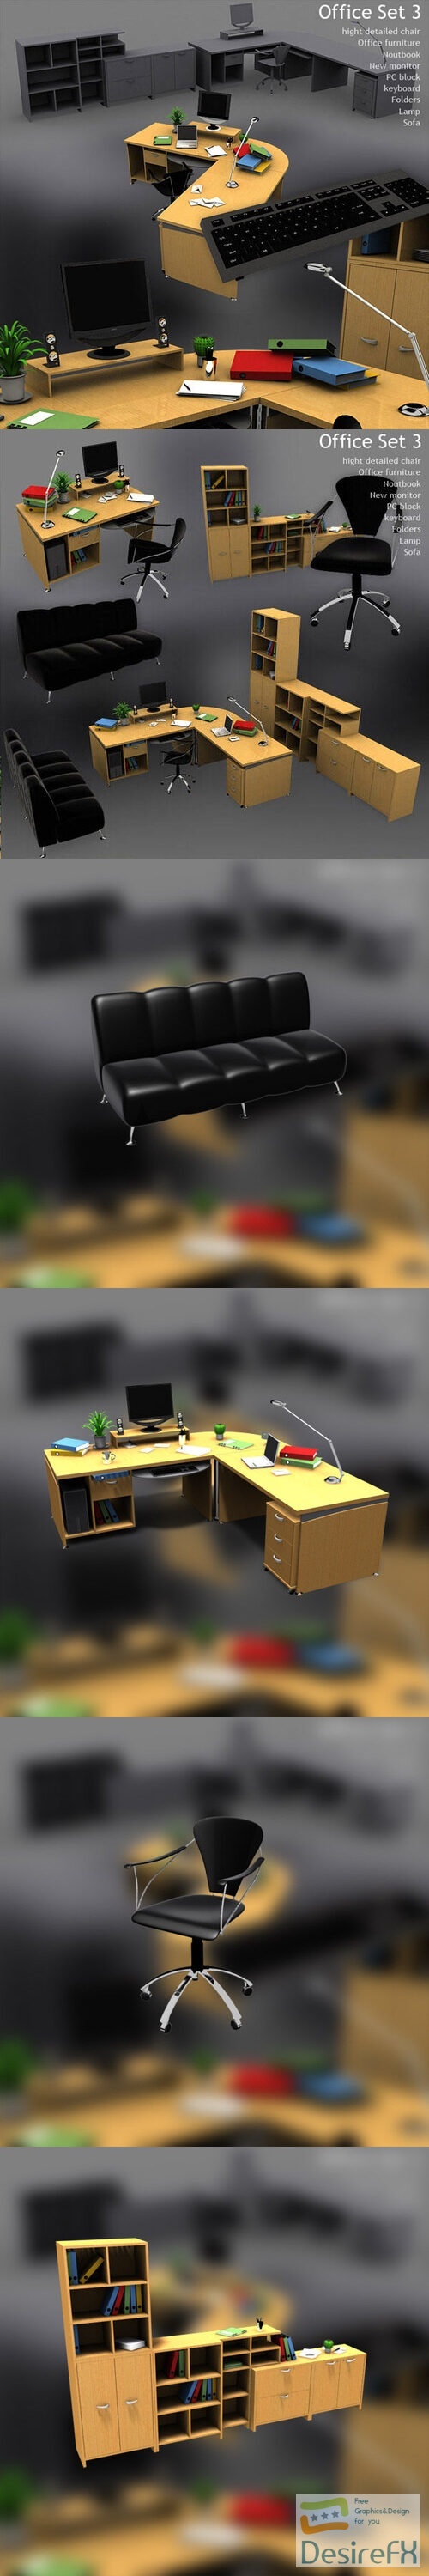 Office Set 3 3D Model